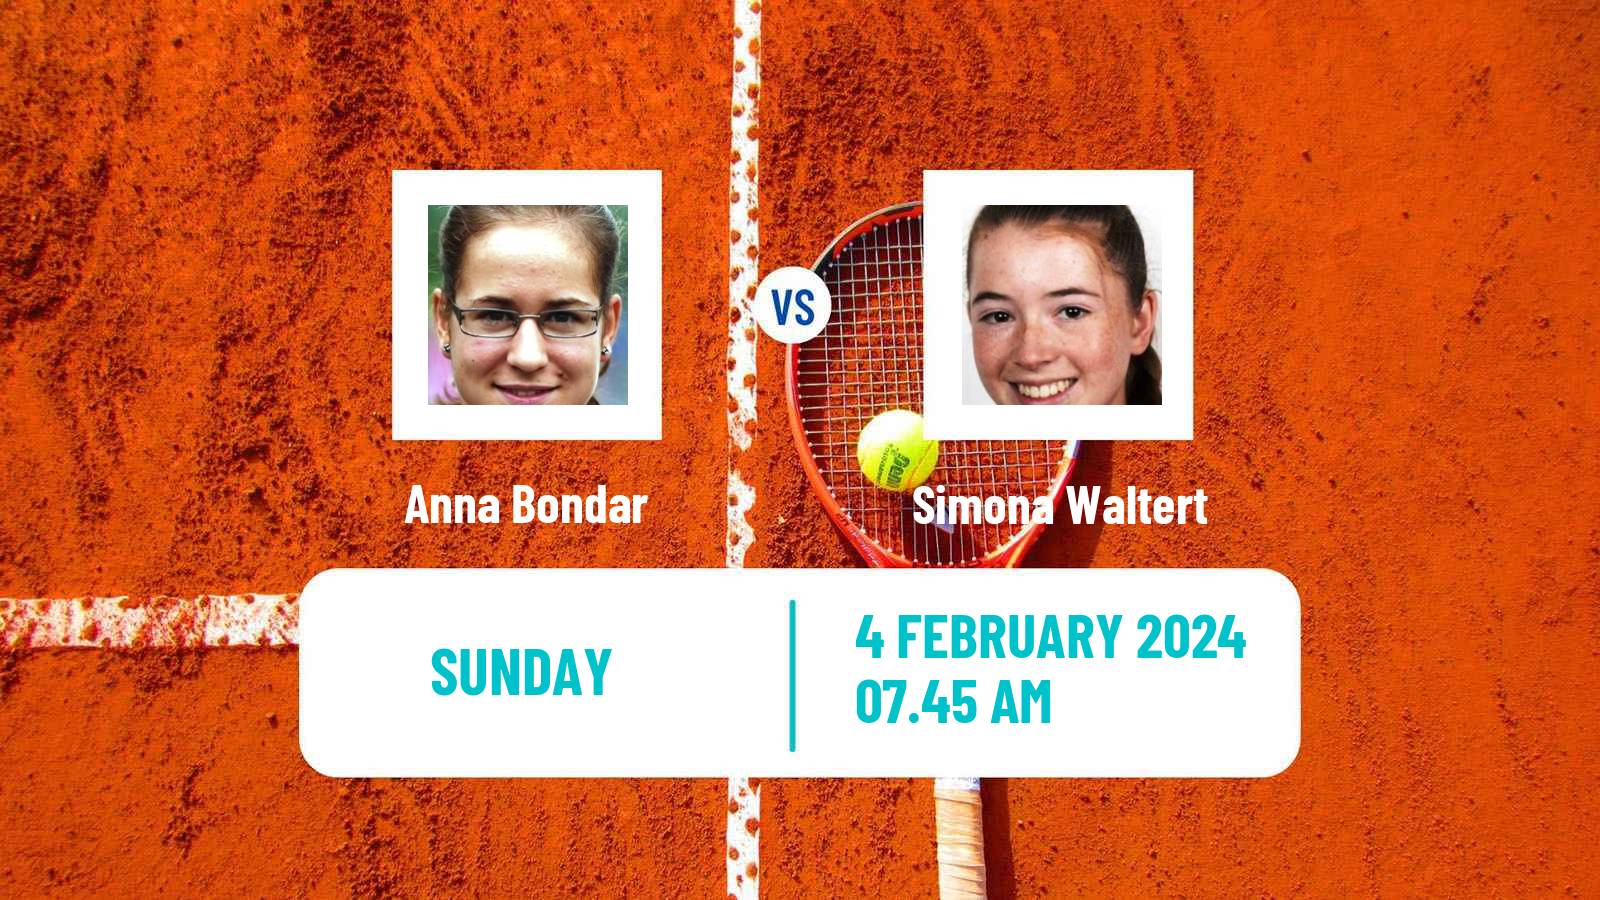 Tennis WTA Cluj Napoca Anna Bondar - Simona Waltert